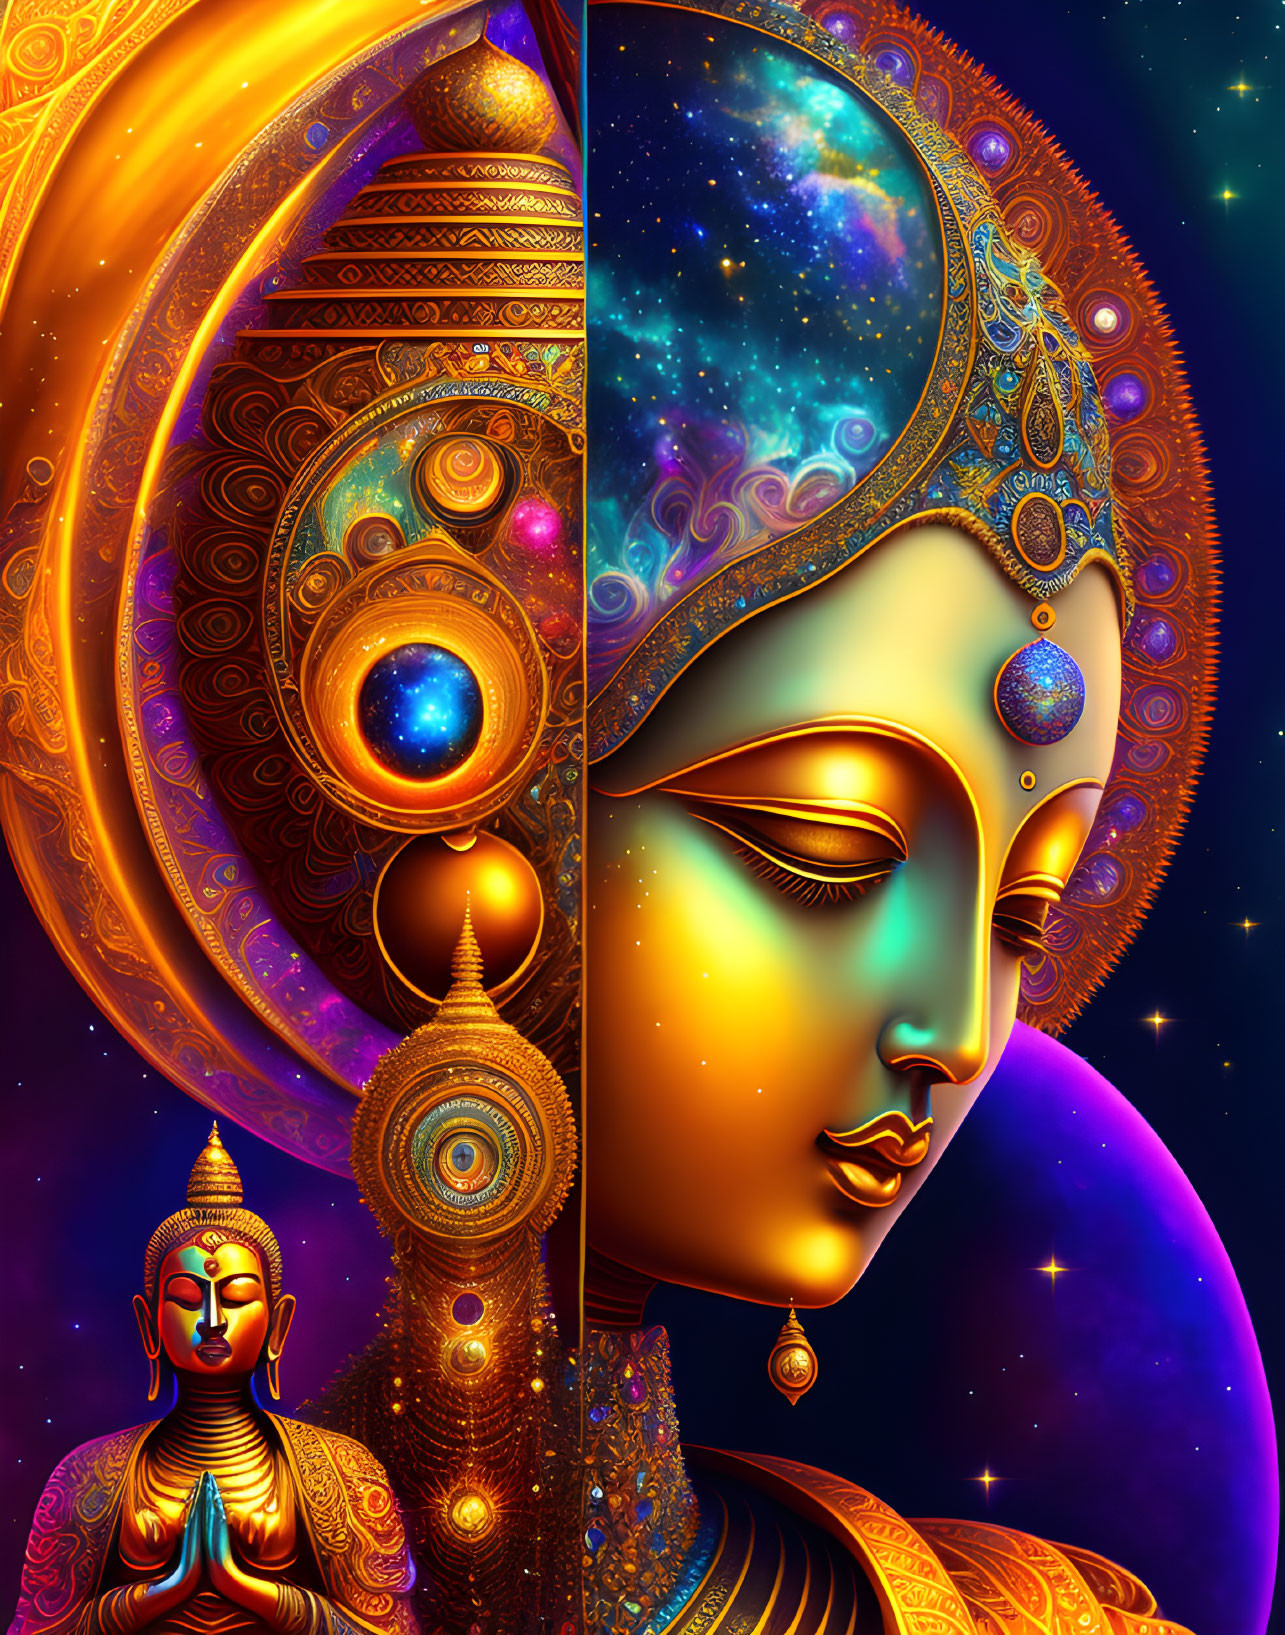 Cosmic Buddha and Deity Merge in Vibrant Artwork